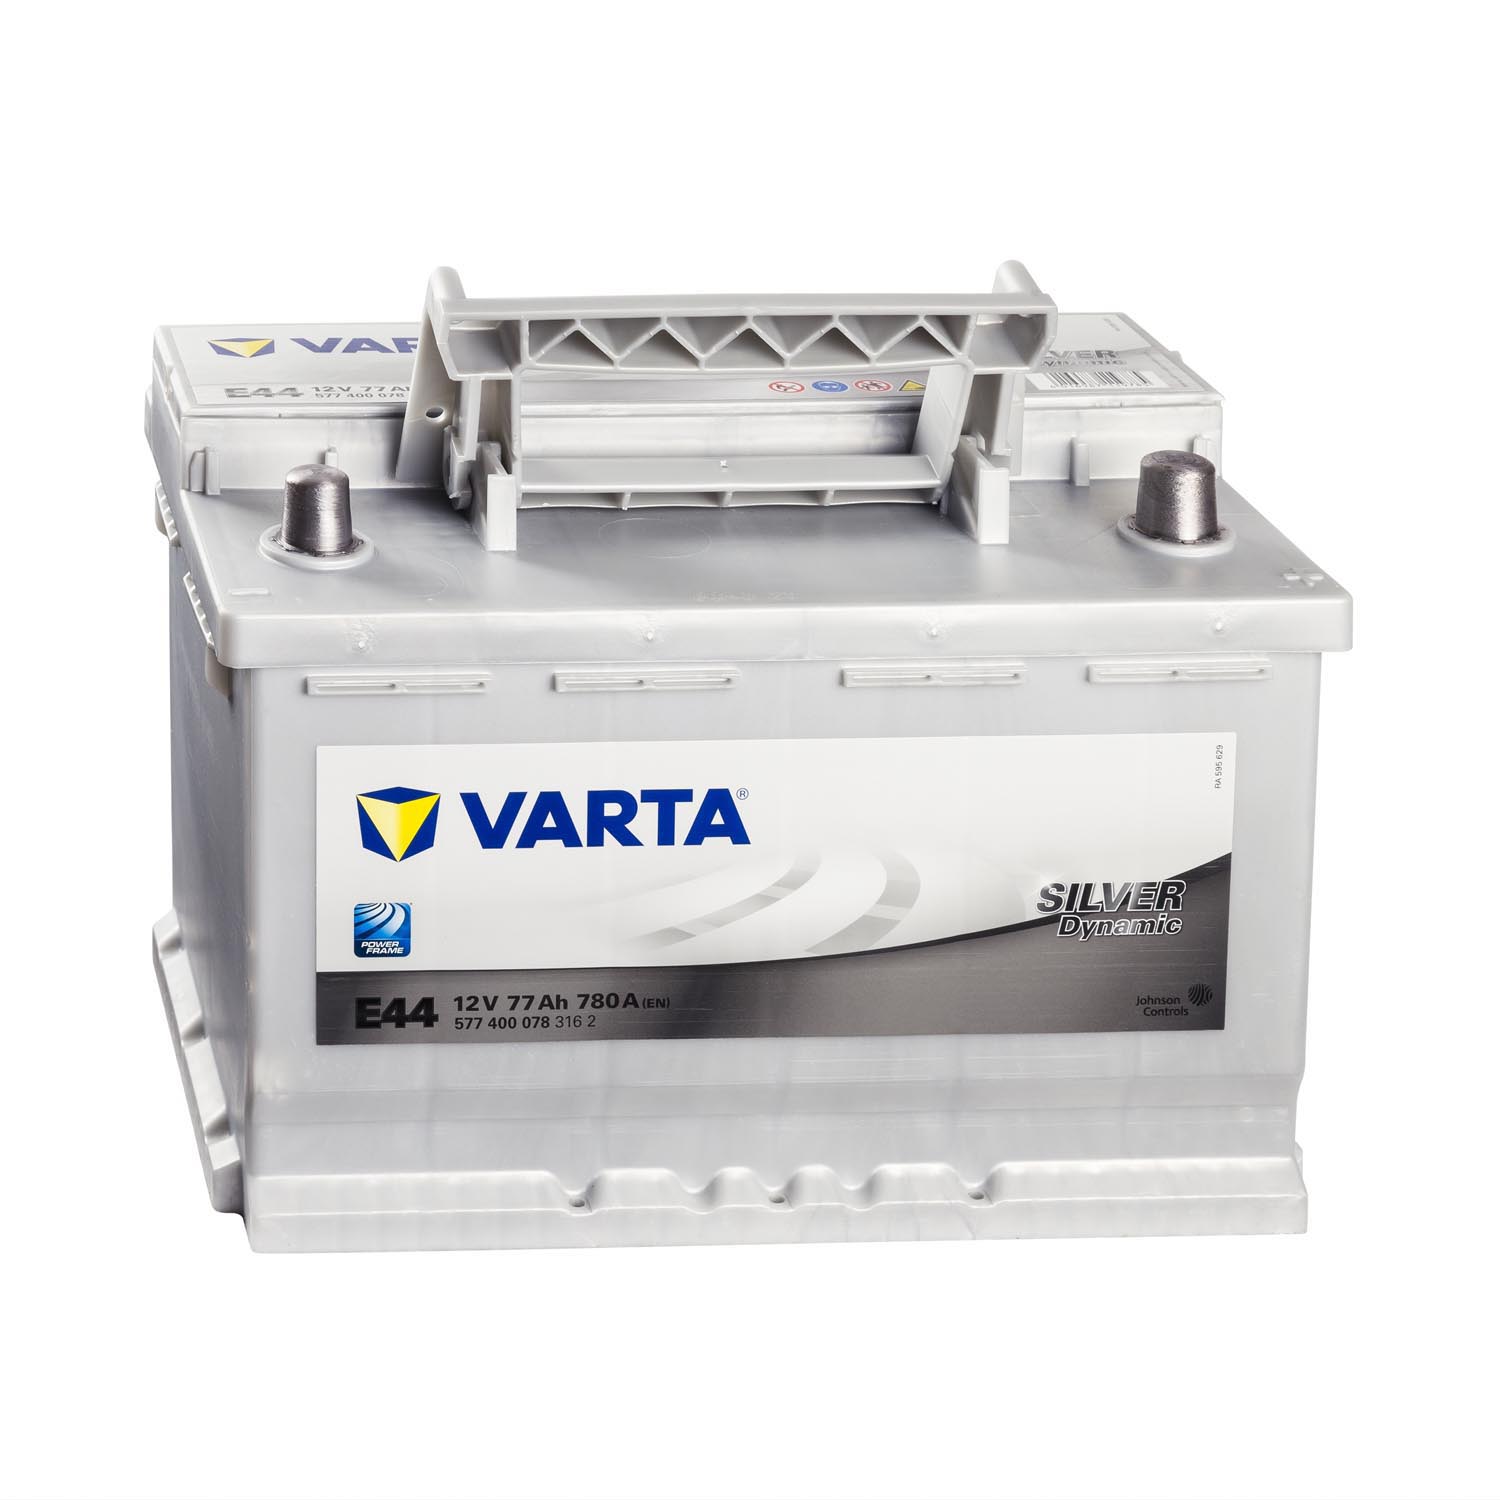 VARTA Silver Dynamic E44 Autobatterie 12V 77Ah | Batterie24.de